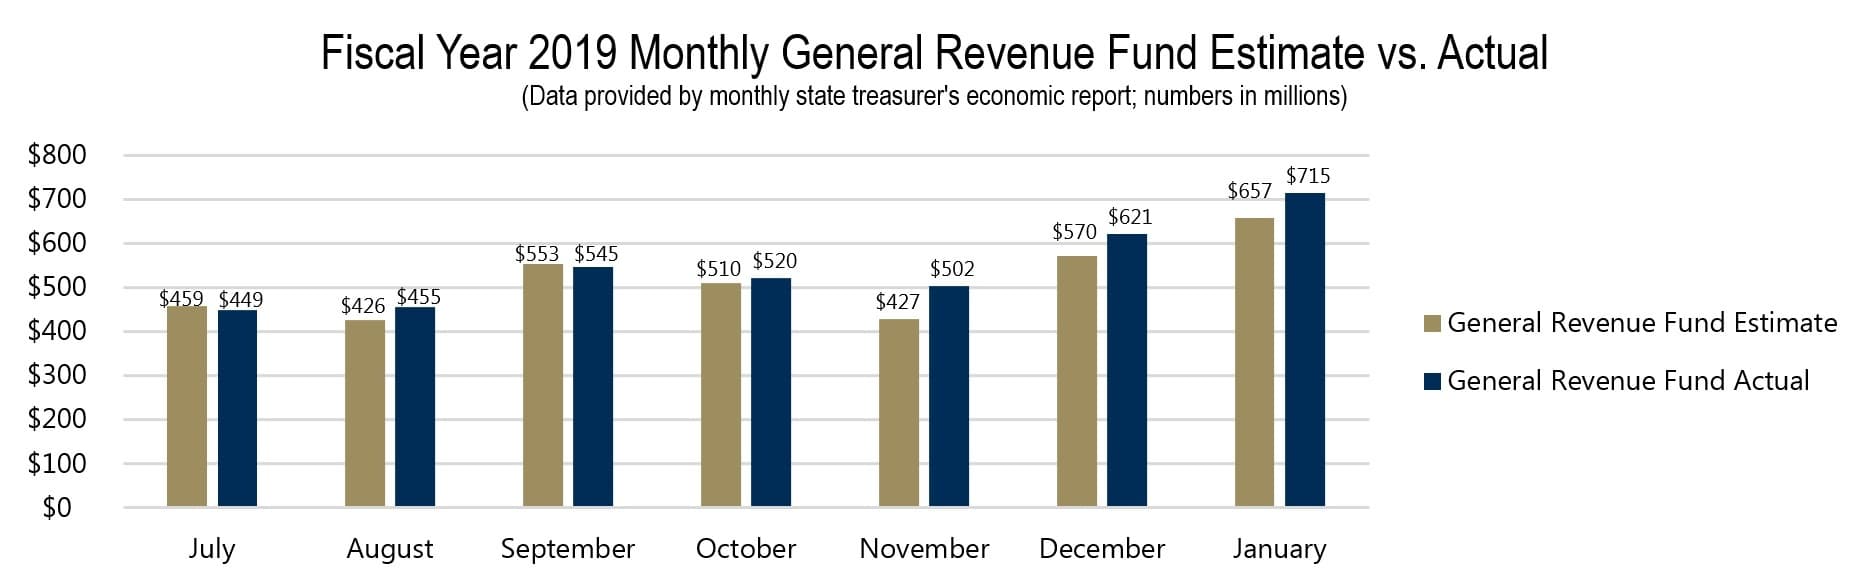 FY 2019 Monthly General Revenue Fund Estimate vs. Actual